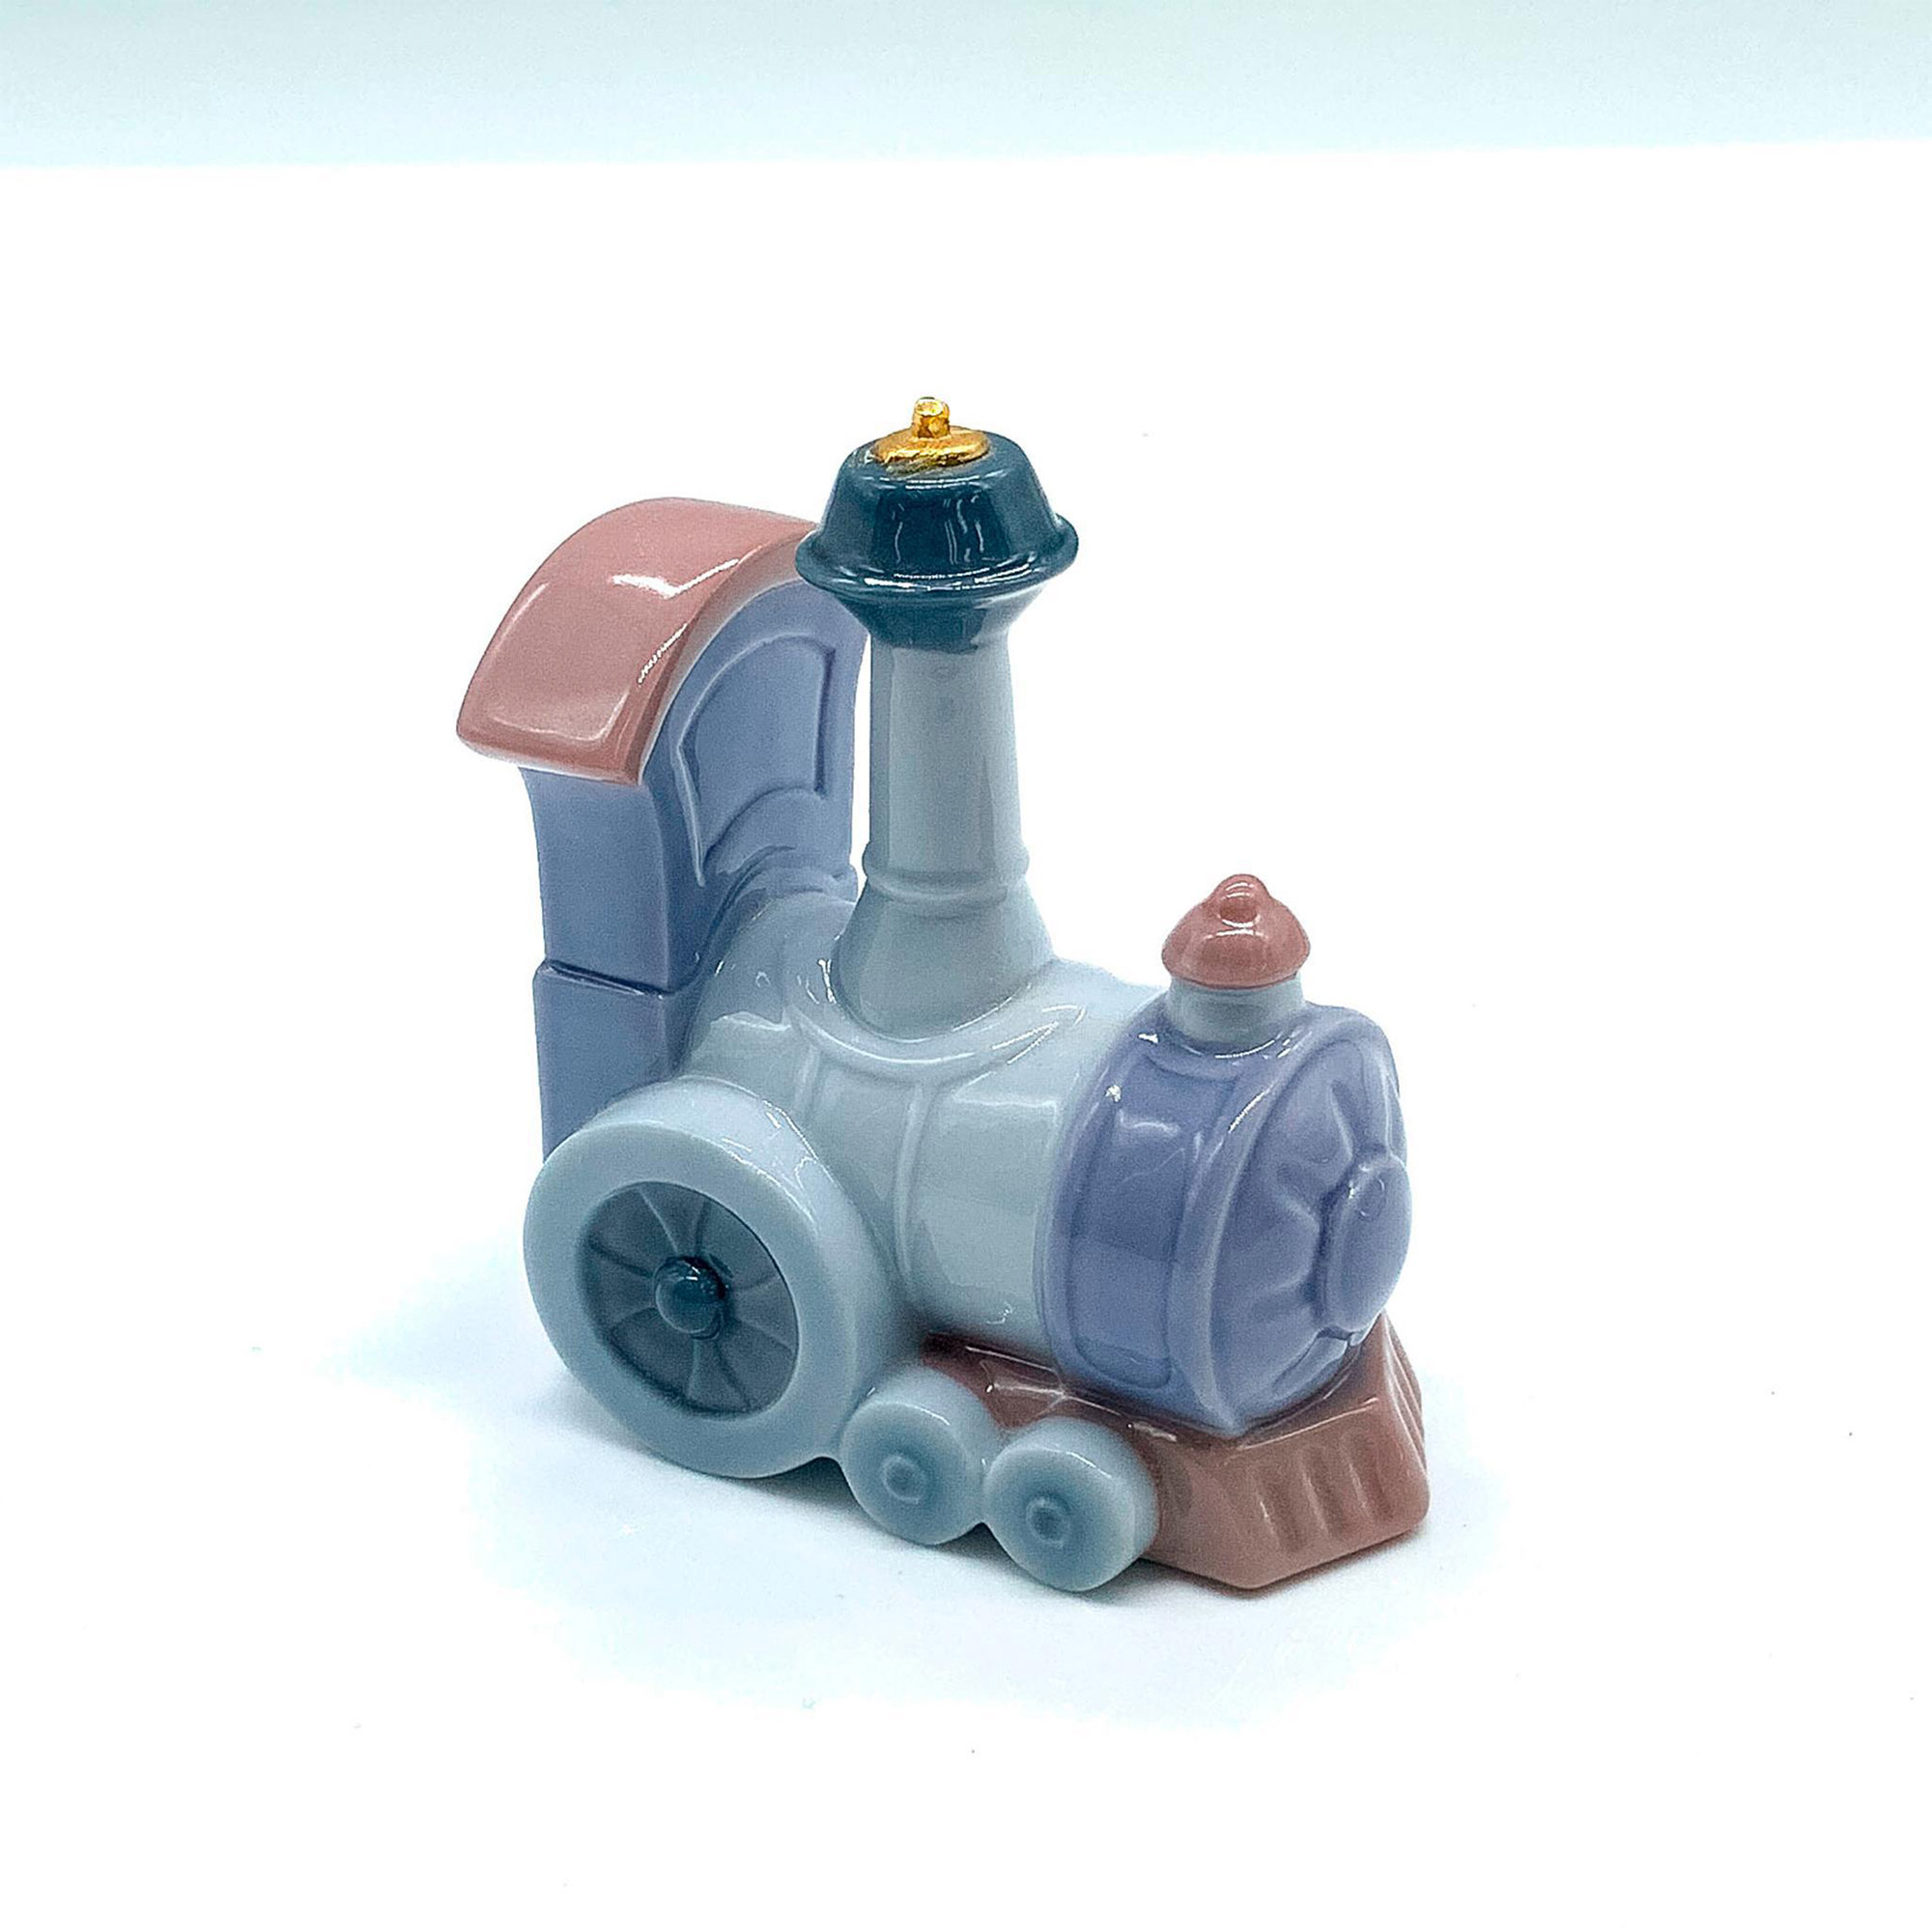 Train 1006264 - Lladro Porcelain Figurine